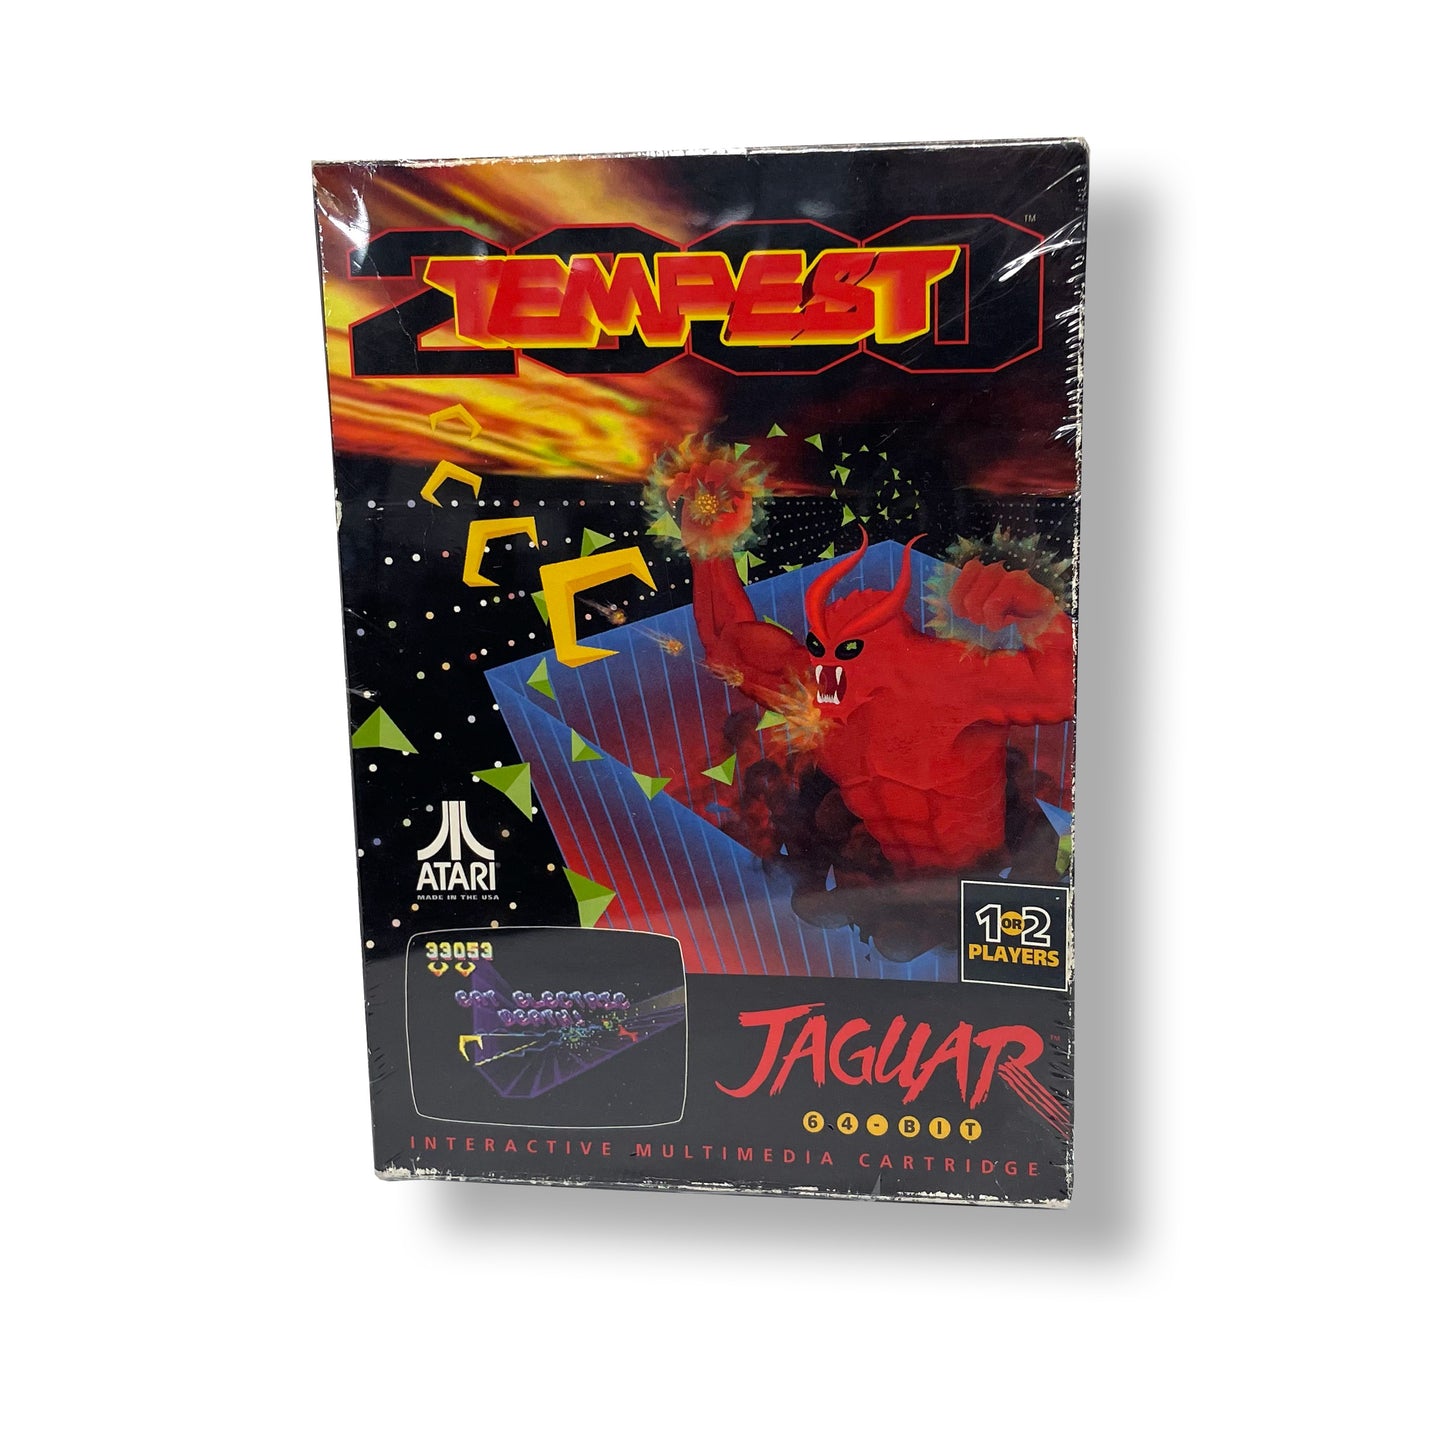 Tempest 2000 for the Atari Jaguar